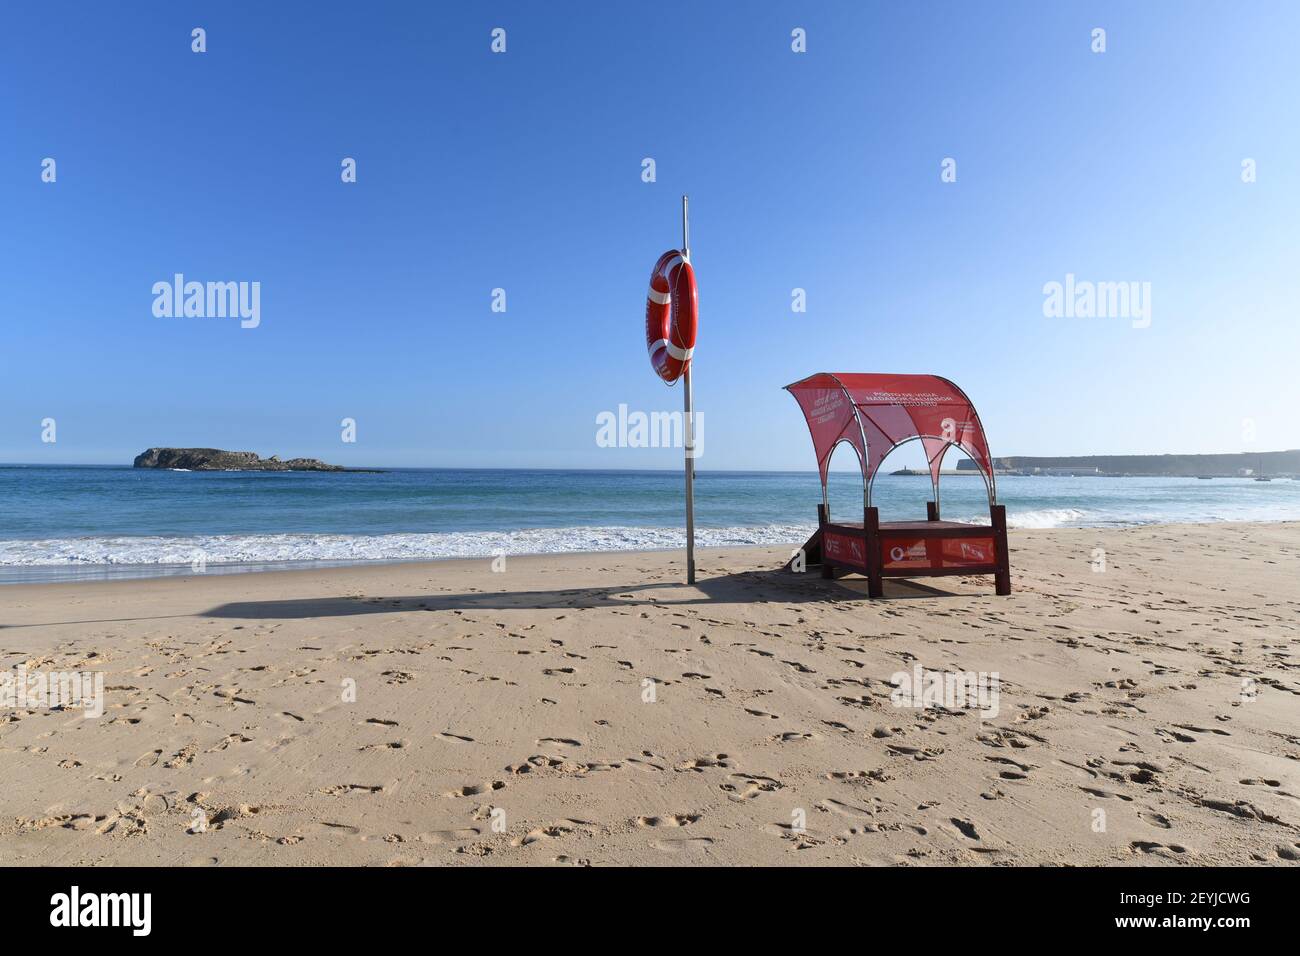 Sagres, Portugal: October 2020: Empty lifeguard post on an empty sandy beach Stock Photo